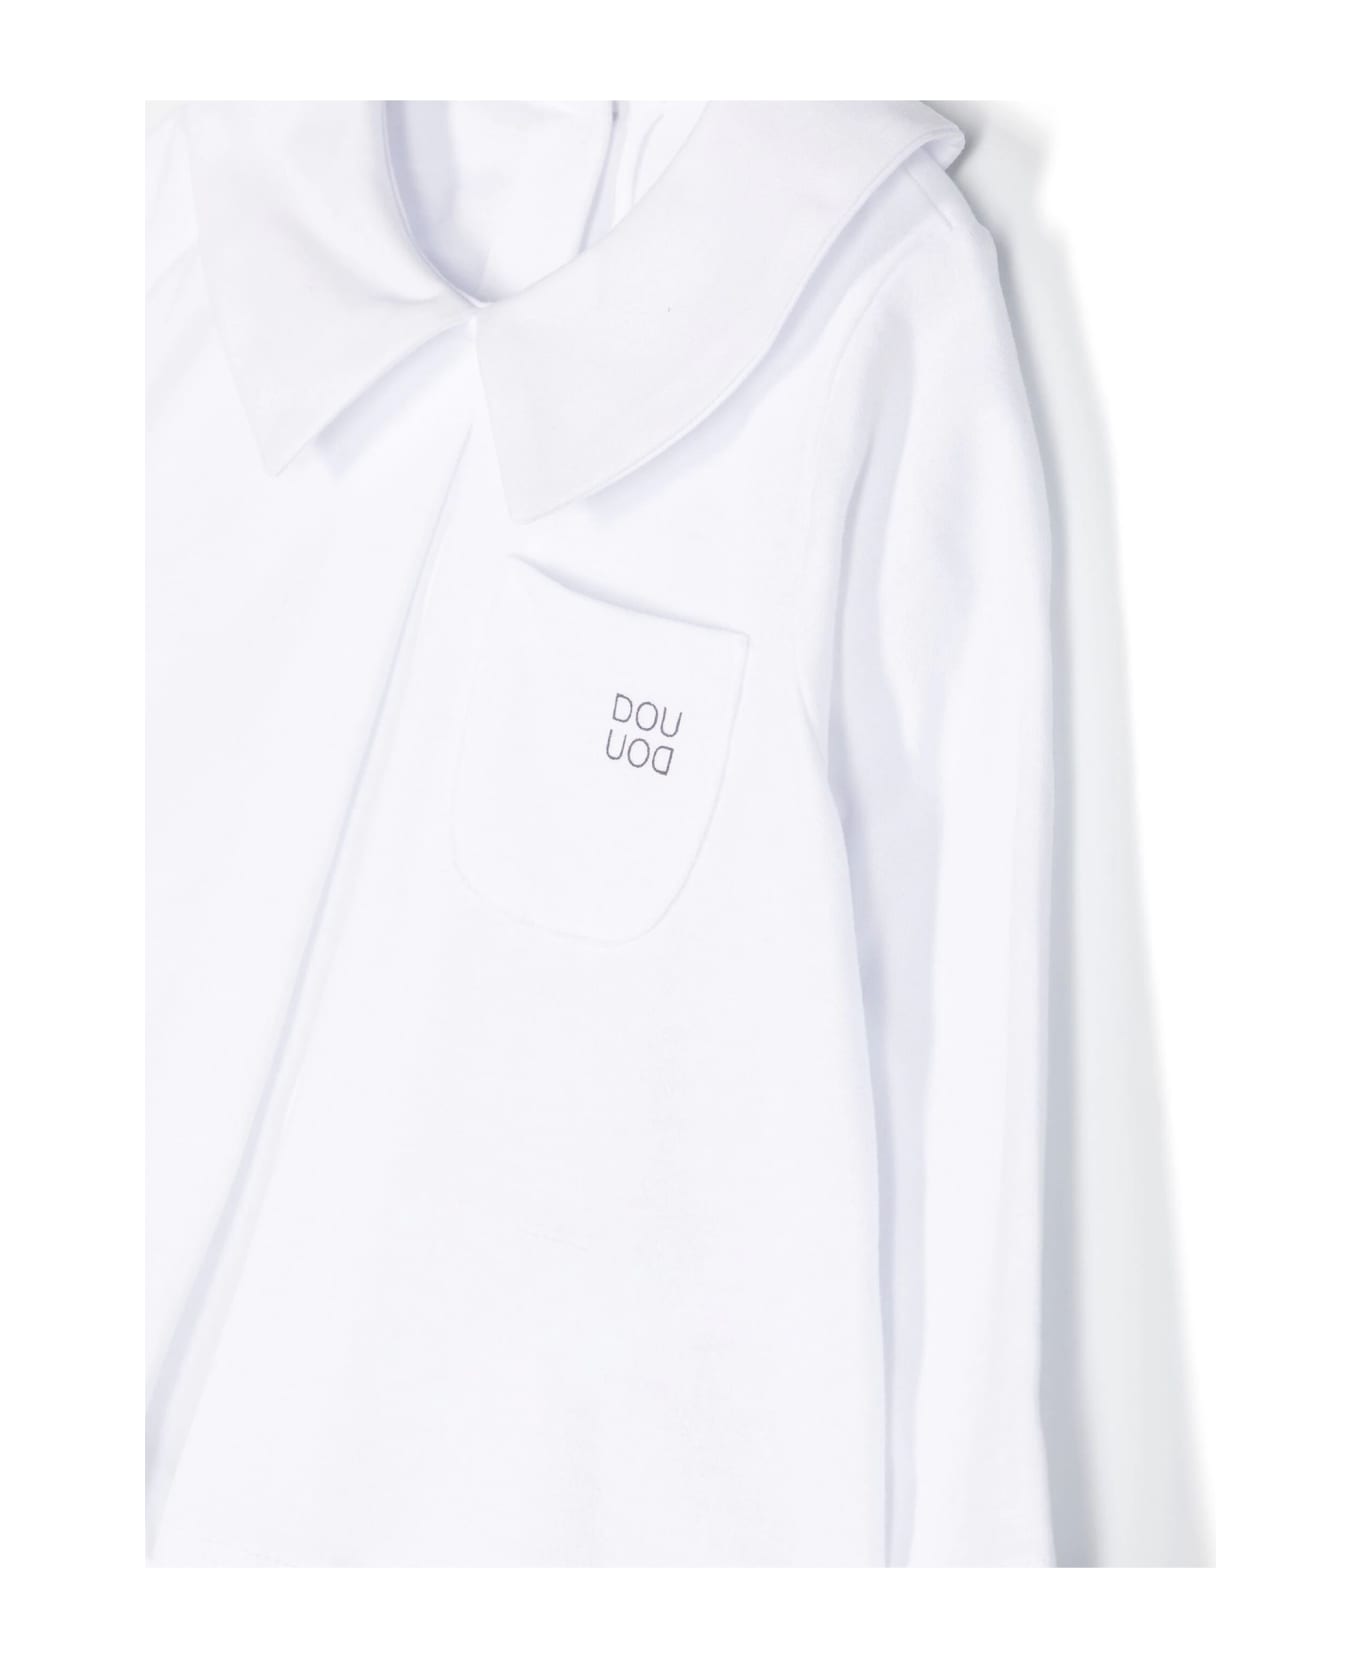 Douuod Shirts White - White シャツ